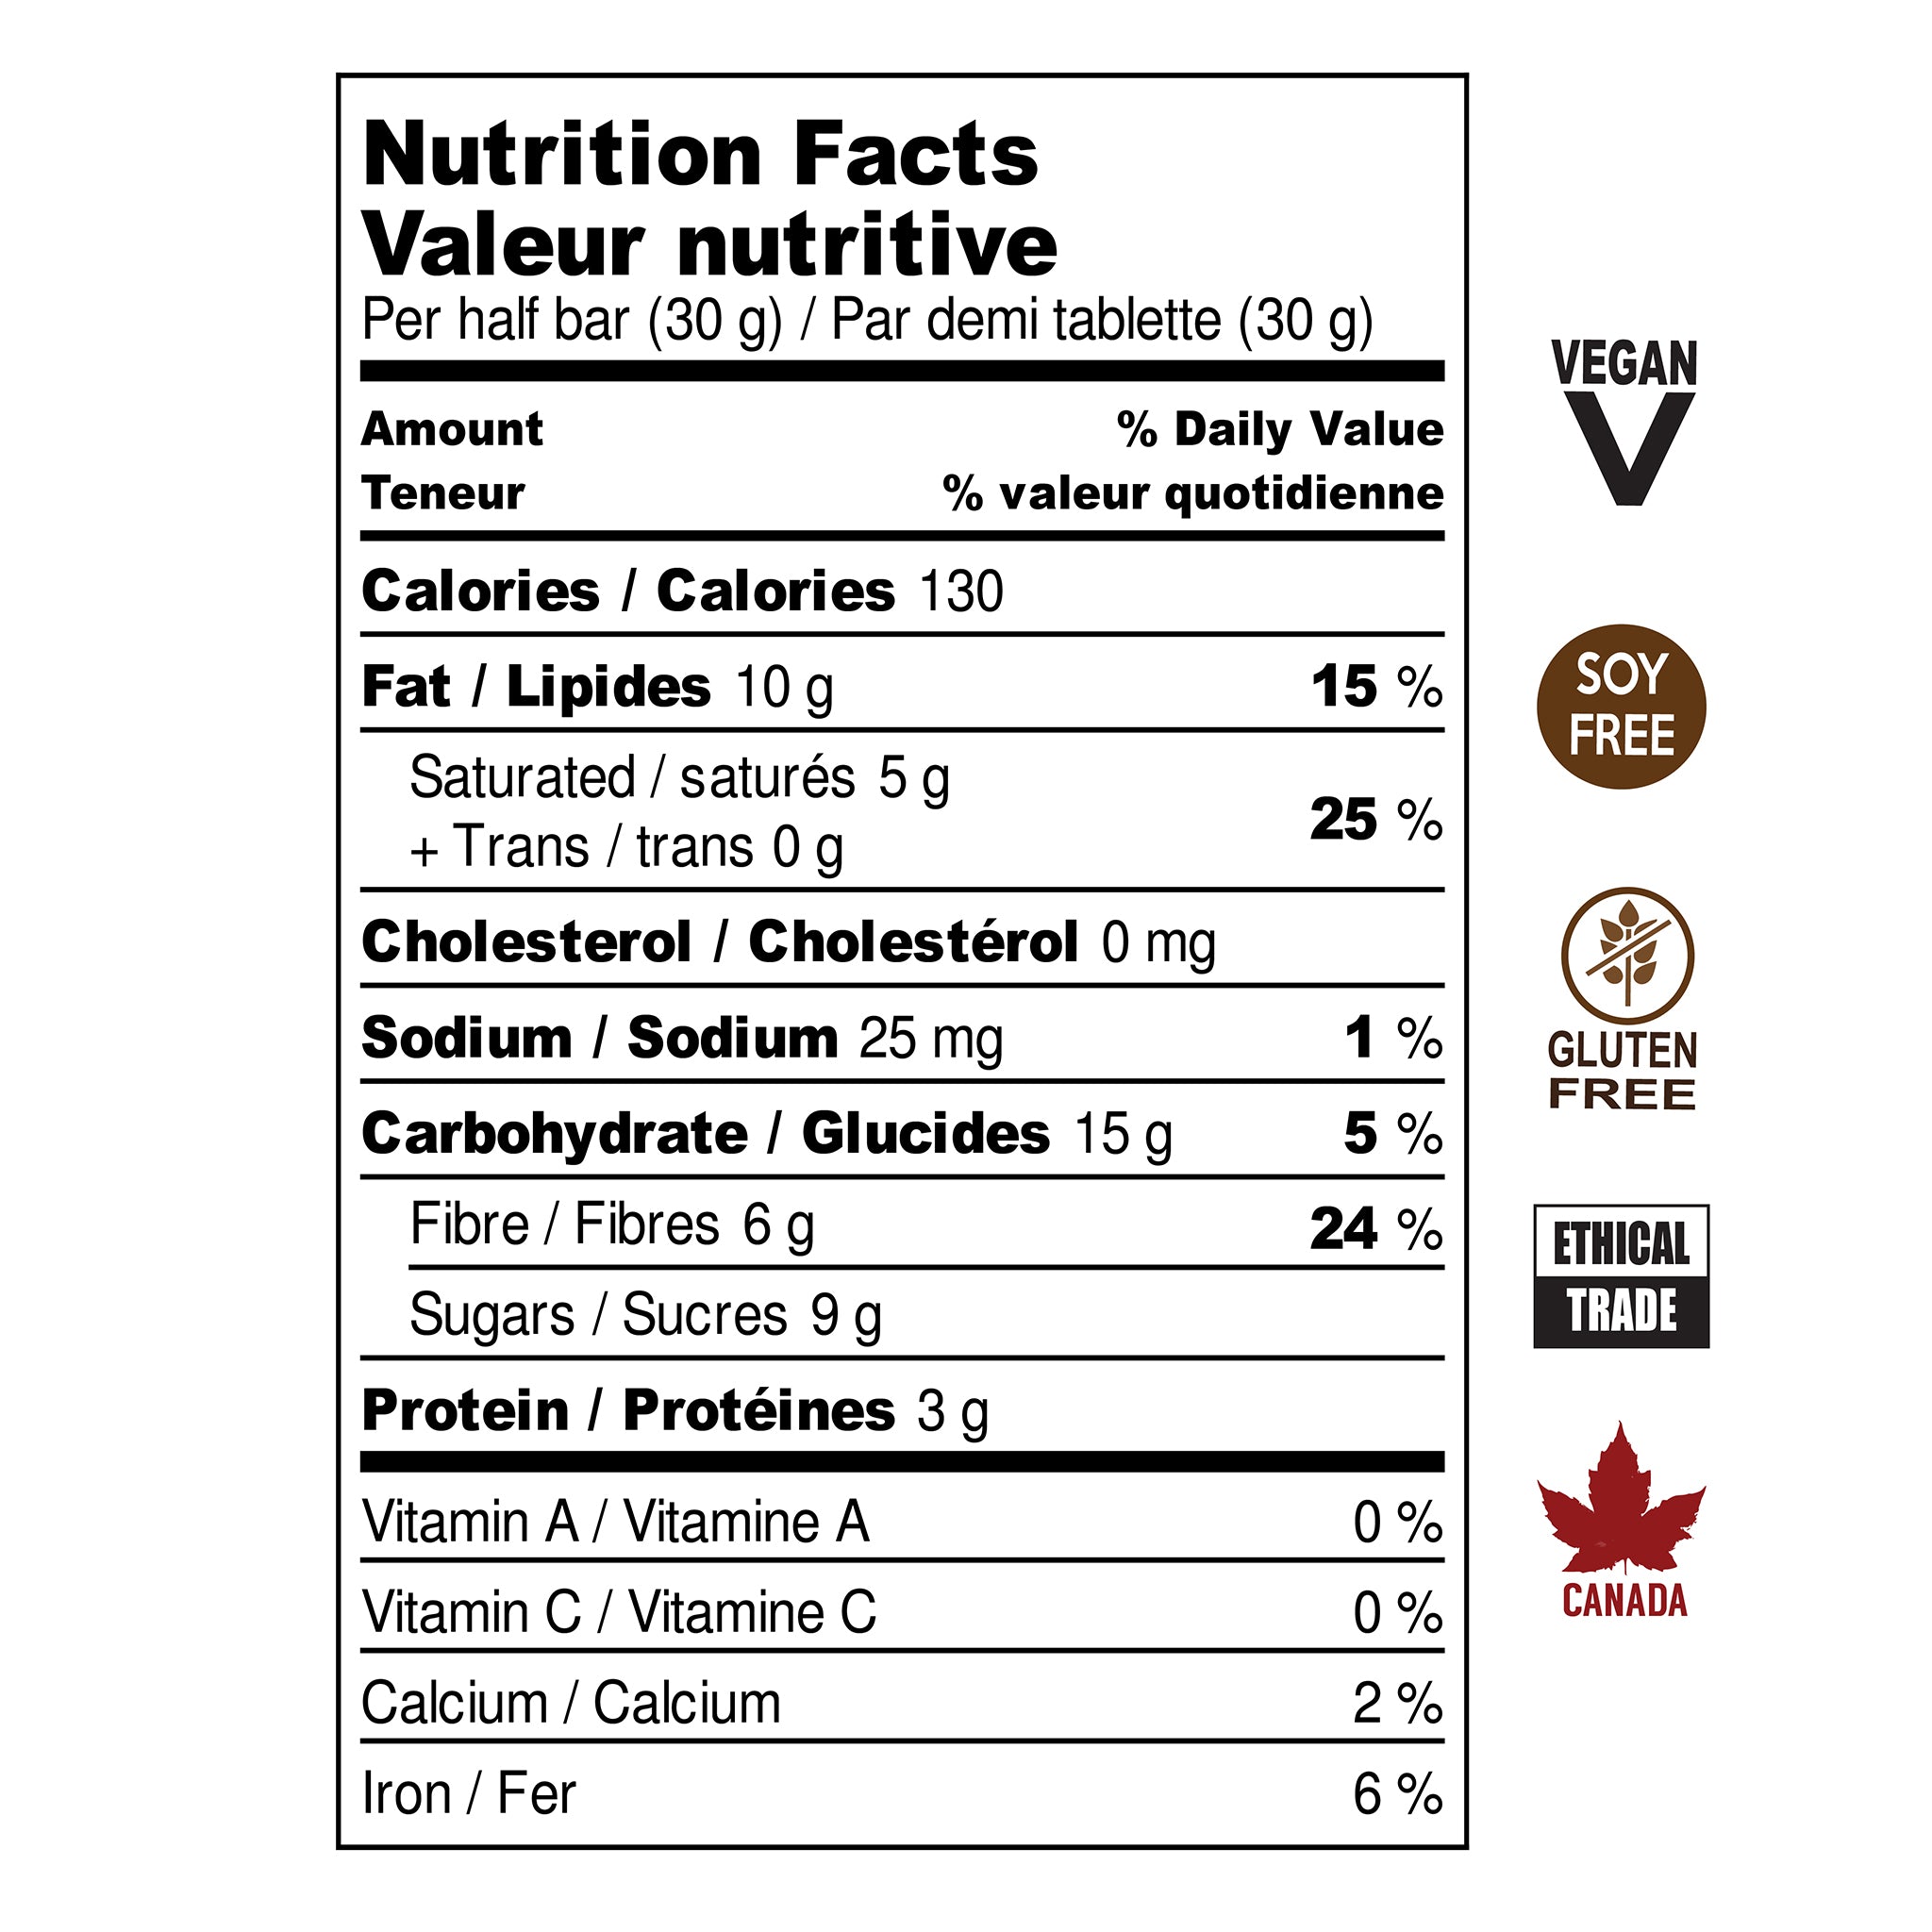 PB & Joy 65% dark chocolate bar nutritional information. Vegan, Soy Free, Gluten Free, Ethical Trade, Made in Canada